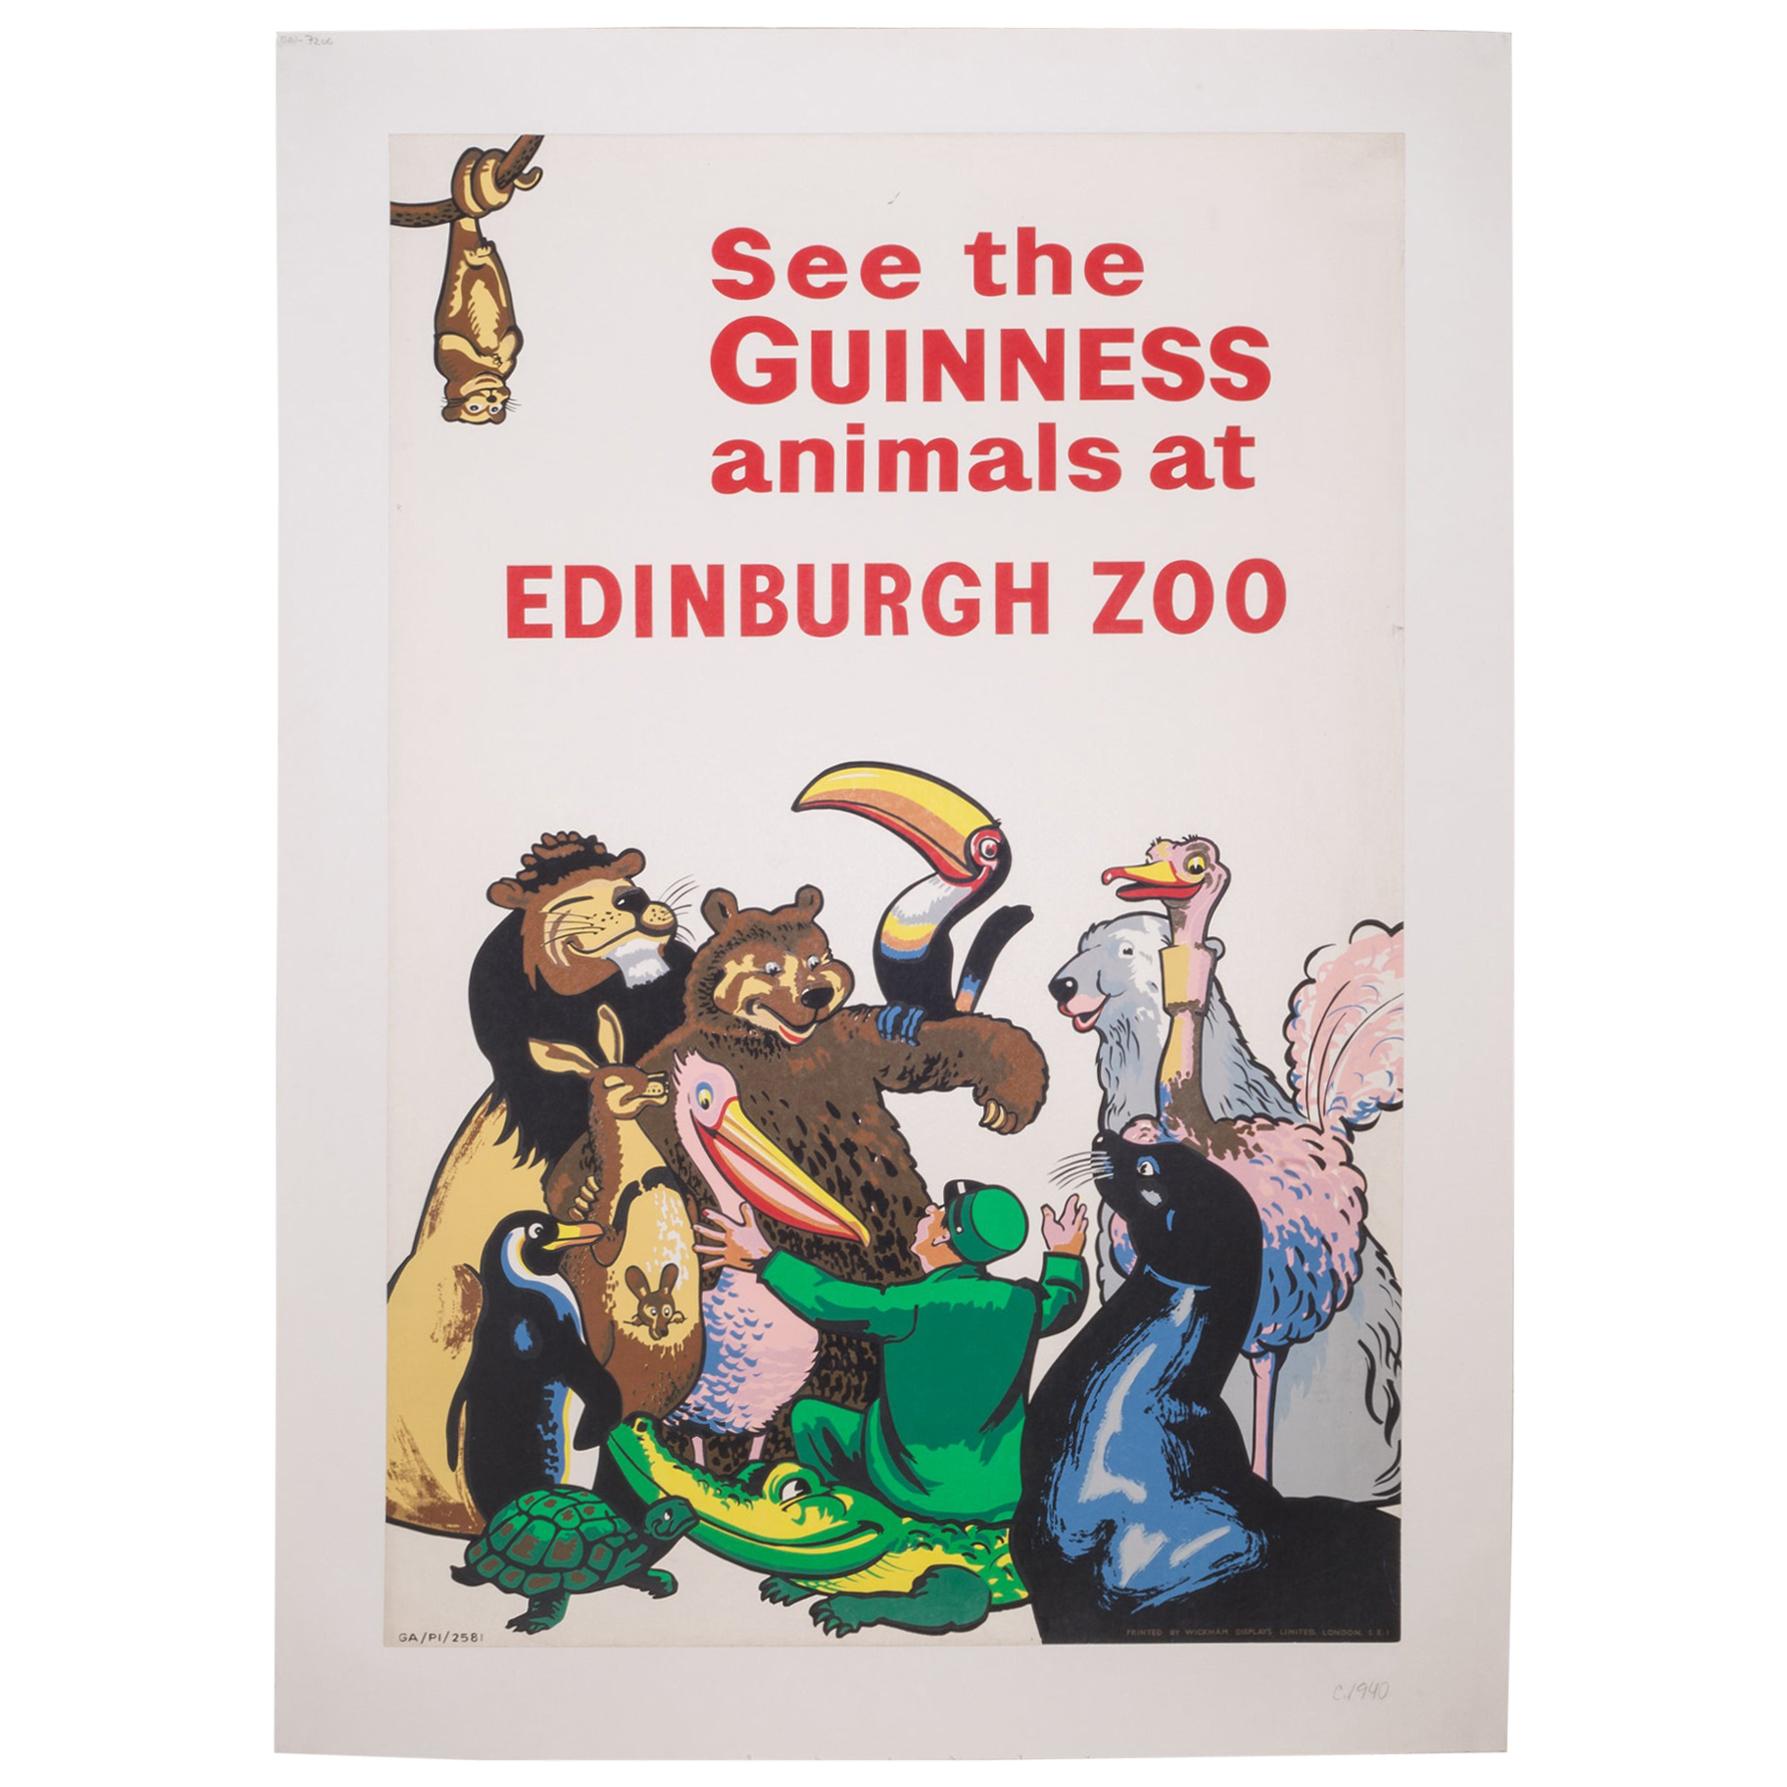 Antique Guiness Beer/Ediburgh Zoo Poster, circa 1940